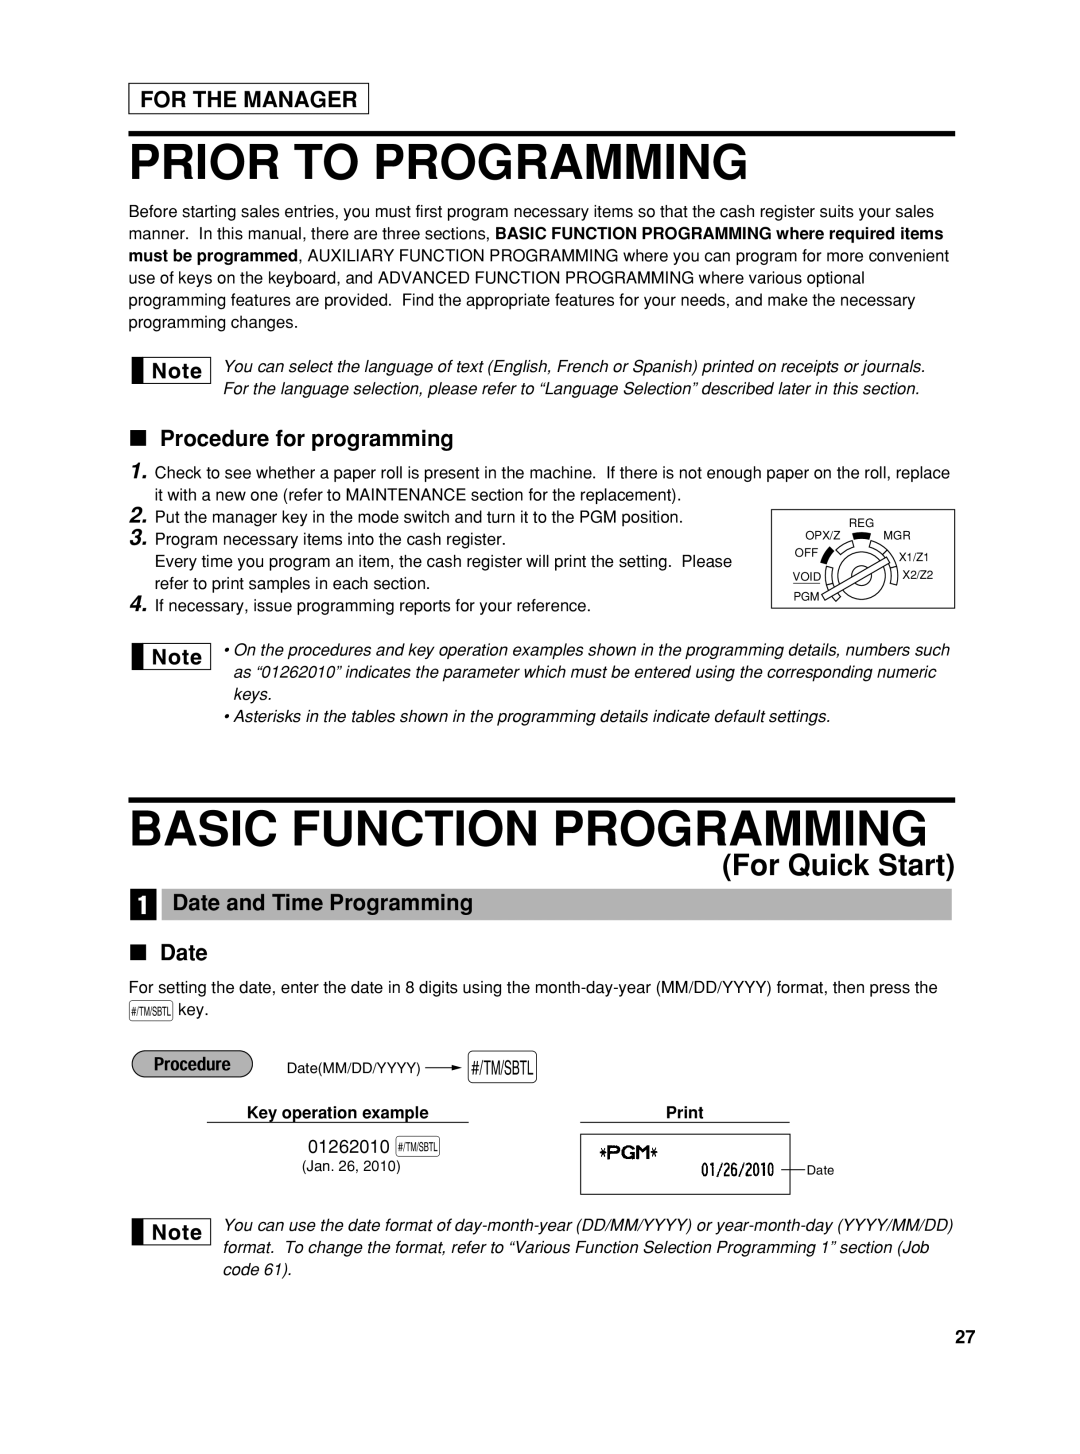 Sharp TINSZ2600RCZZ Prior To Programming, Basic Function Programming, For Quick Start, For The Manager, 01262010 s, Print 